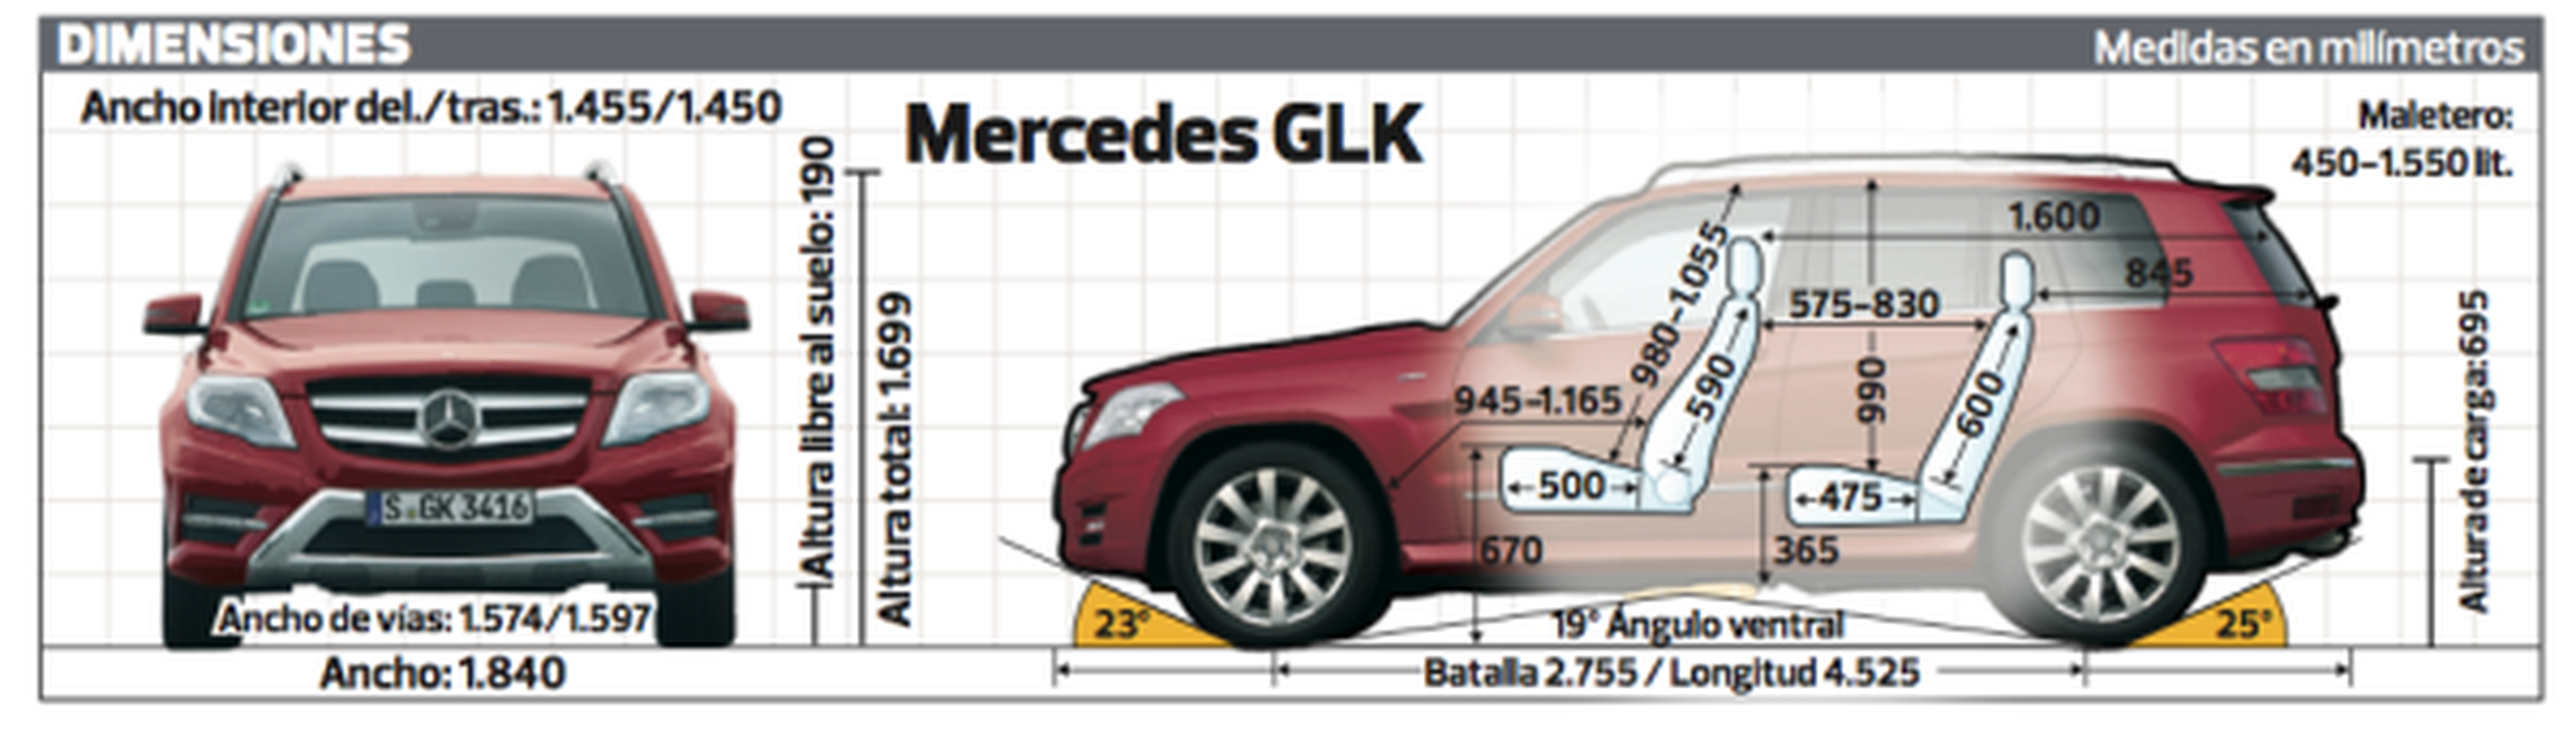 Dimensiones Mercedes GLK